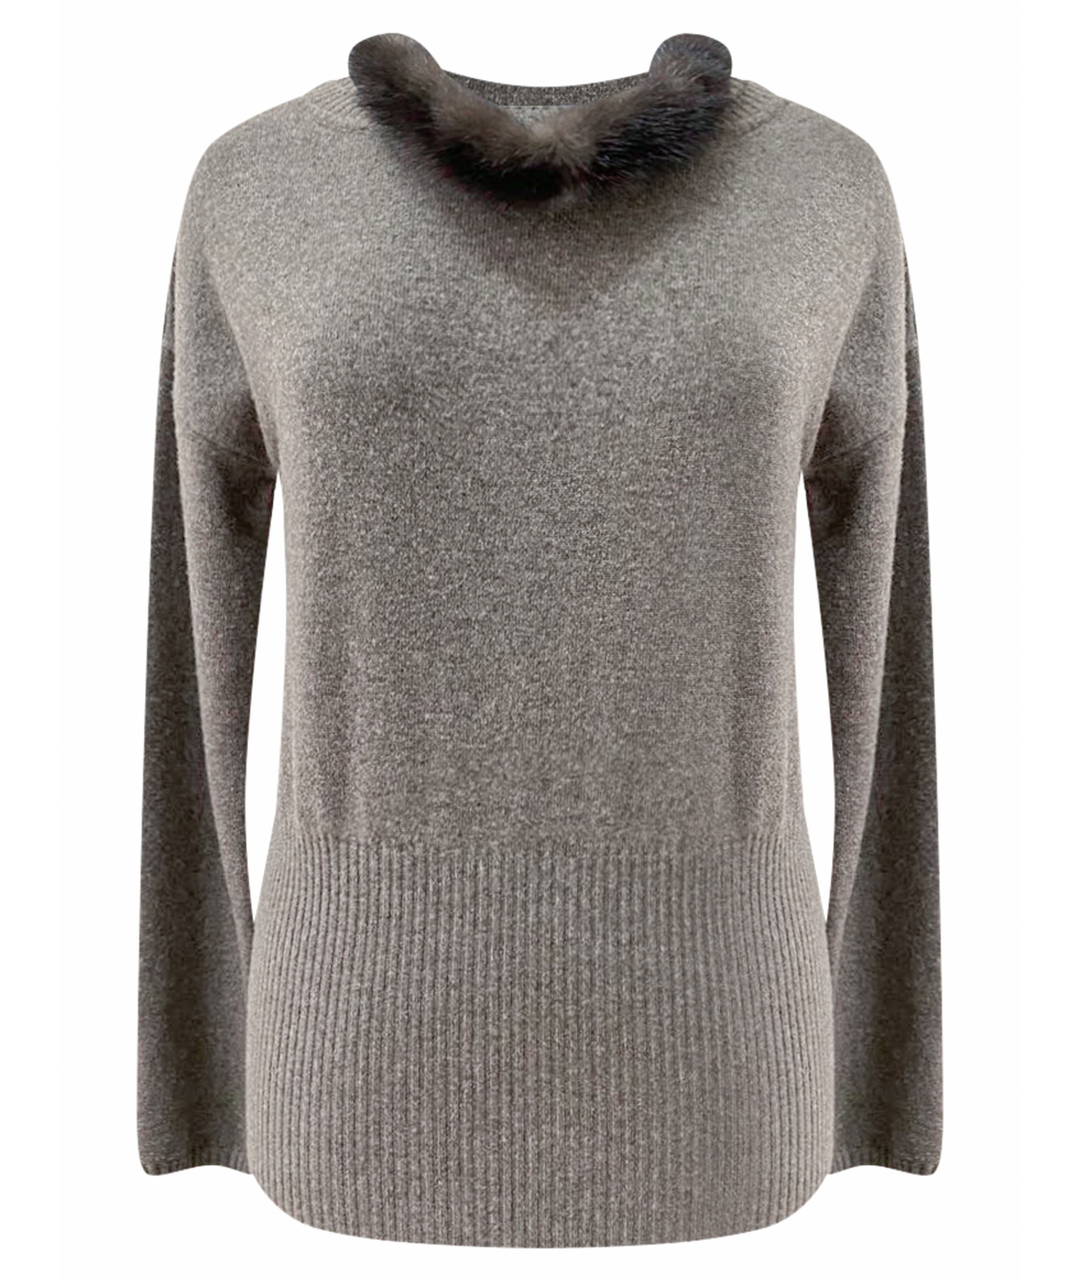 CAVALLI CLASS Коричневый шерстяной джемпер / свитер, фото 1